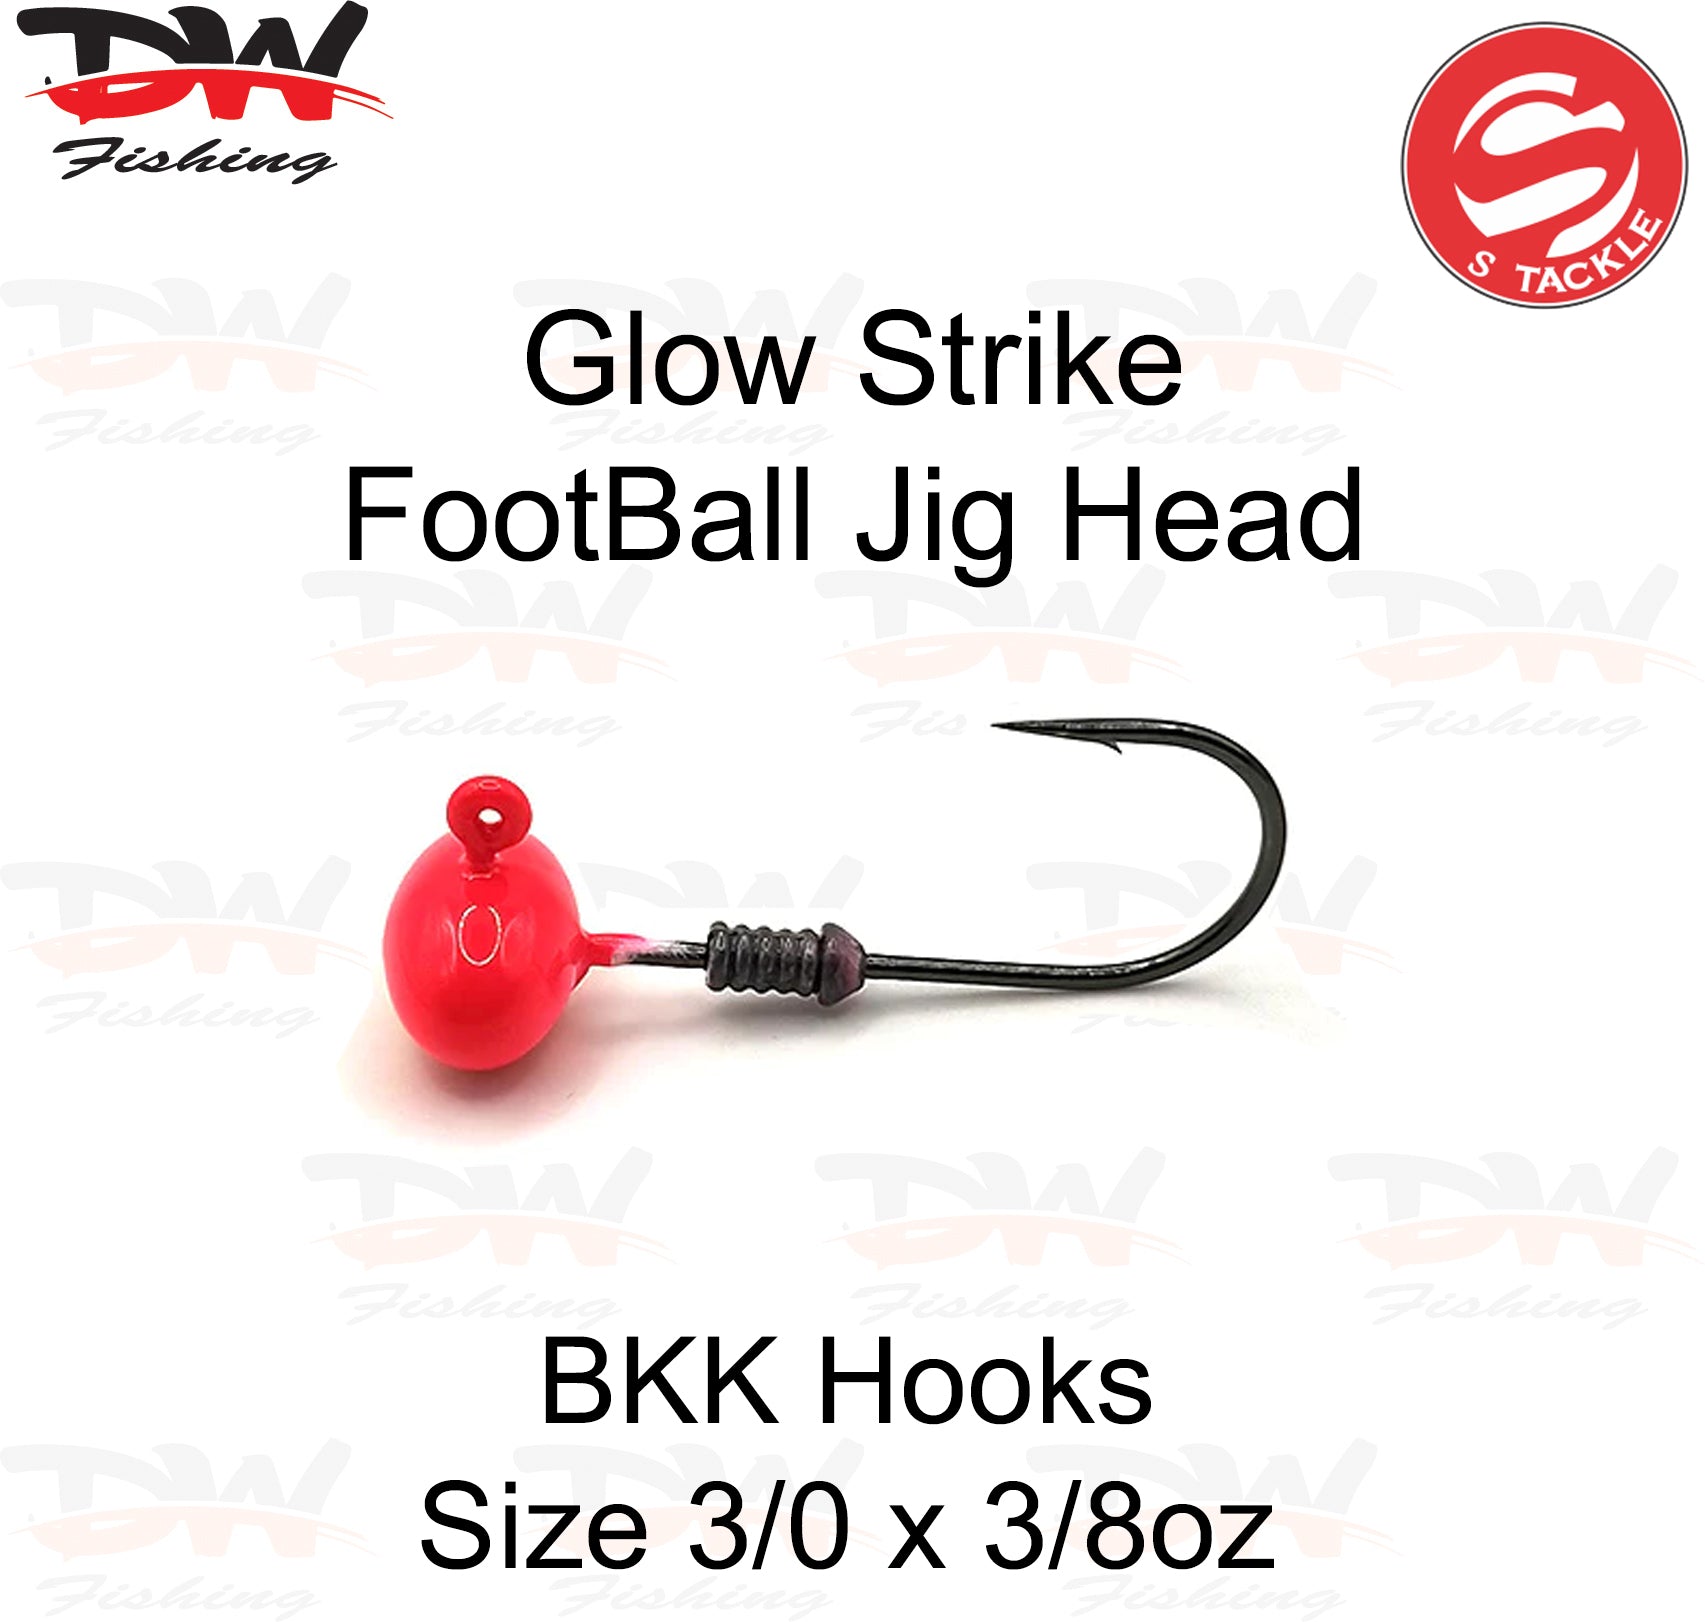 S Tackle Glow strike football jig head on BKK hooks size 3/0 3/8oz